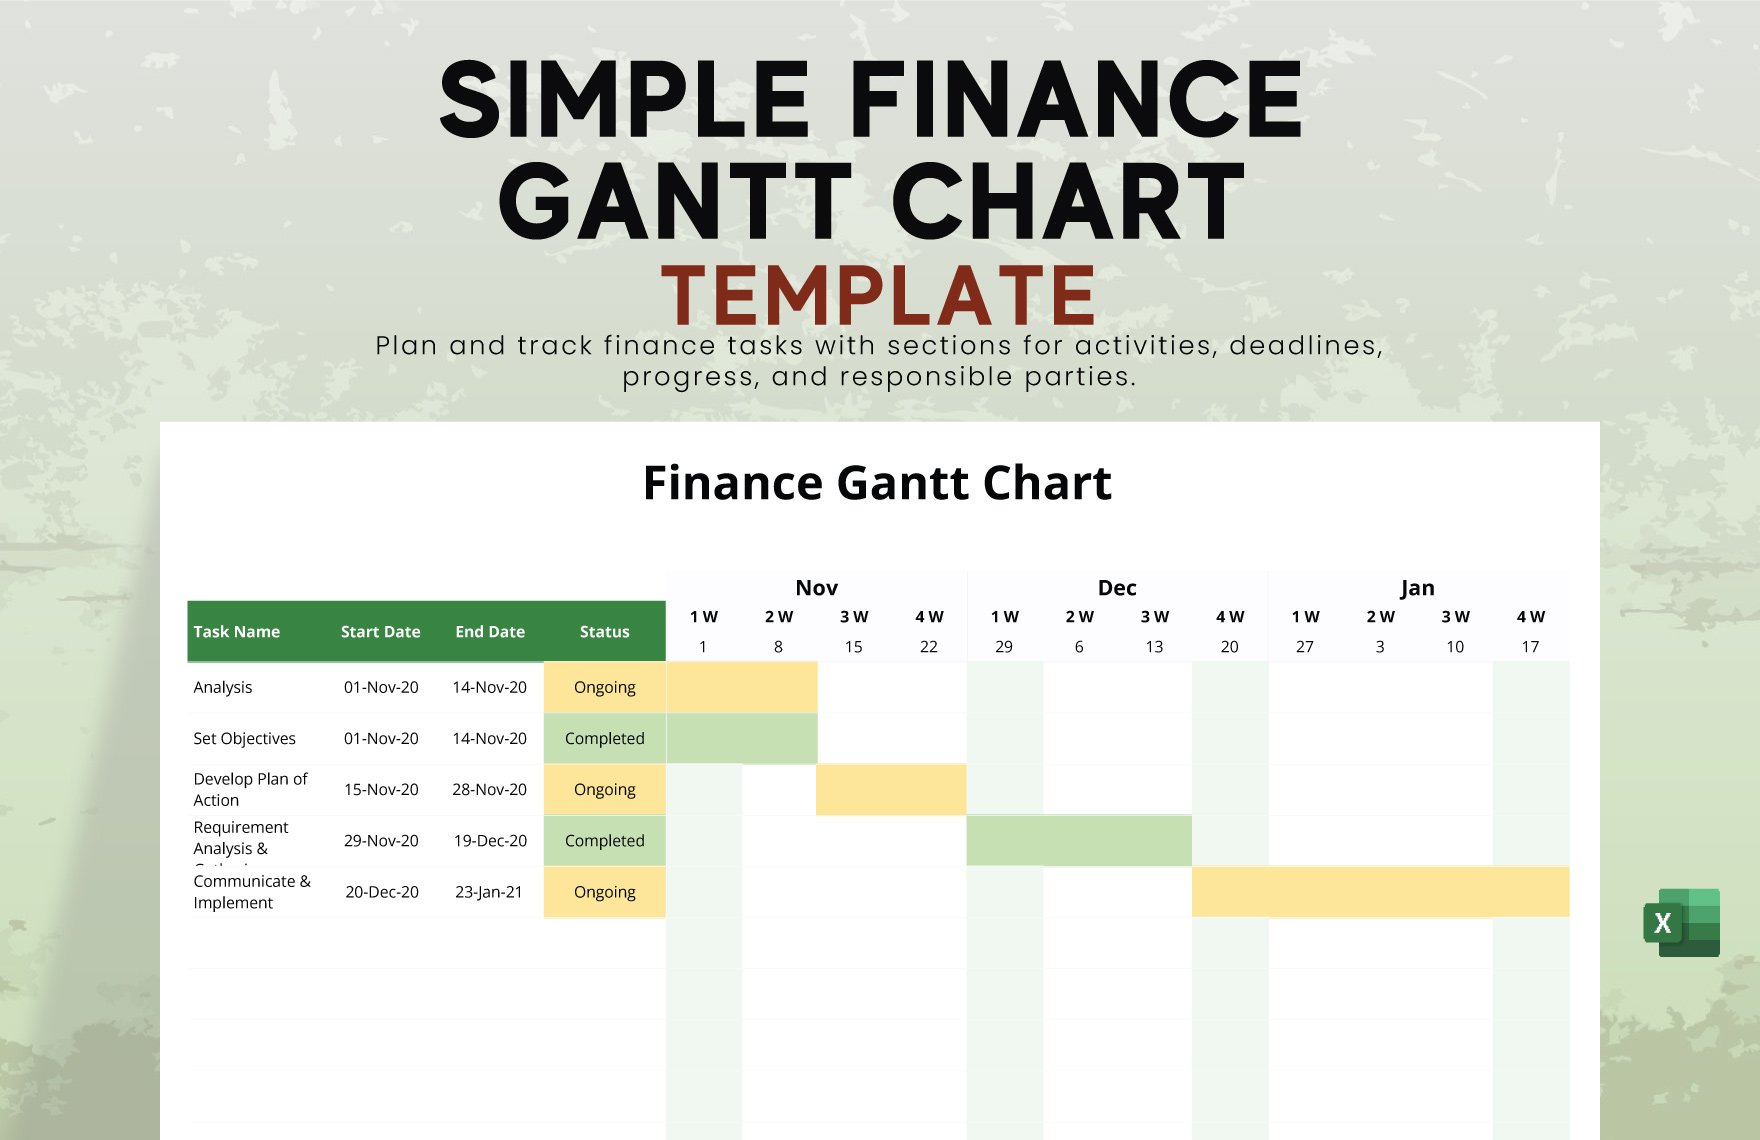 Simple Finance Gantt Chart Template in Excel